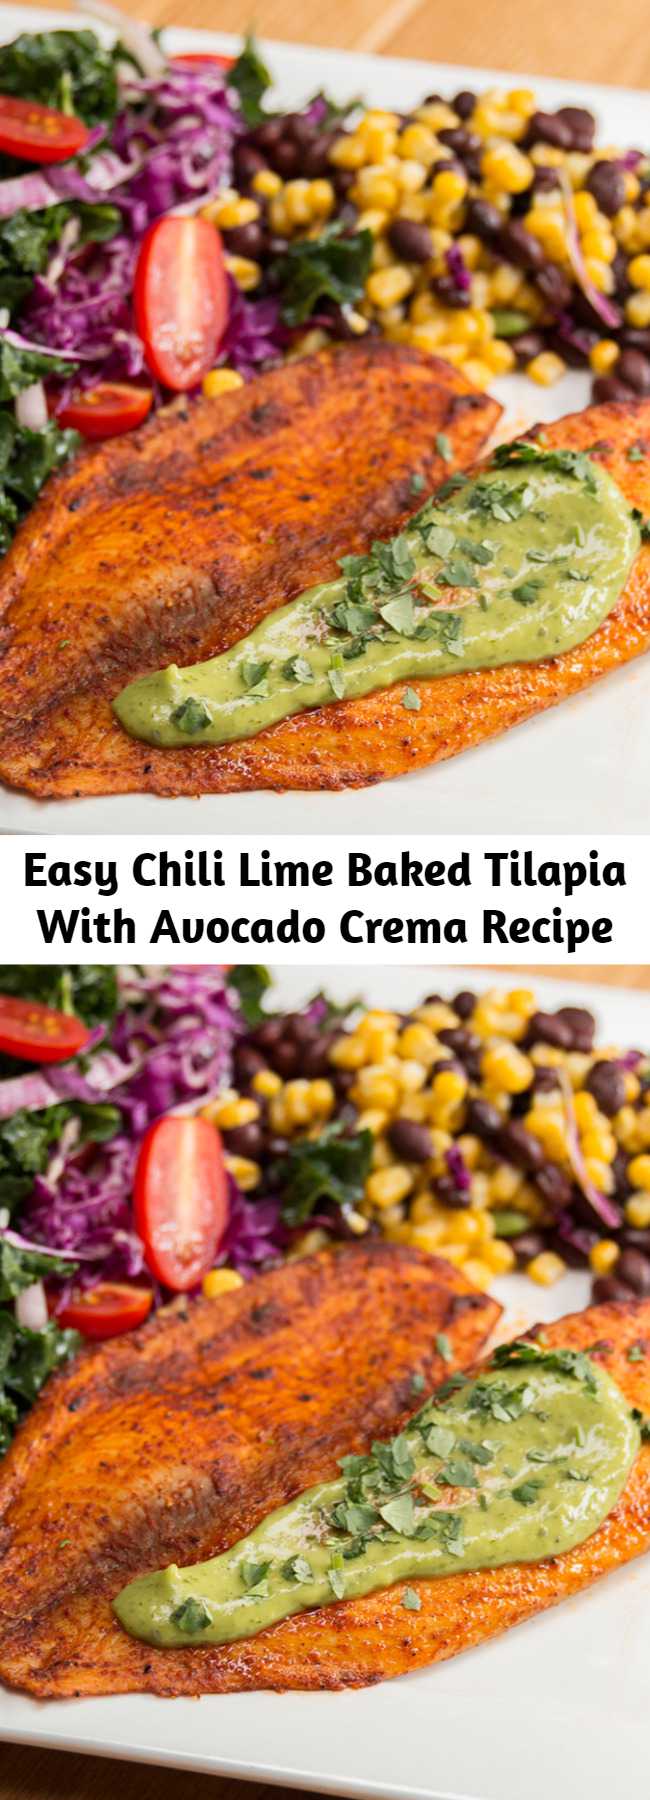 Easy Chili Lime Baked Tilapia With Avocado Crema Recipe